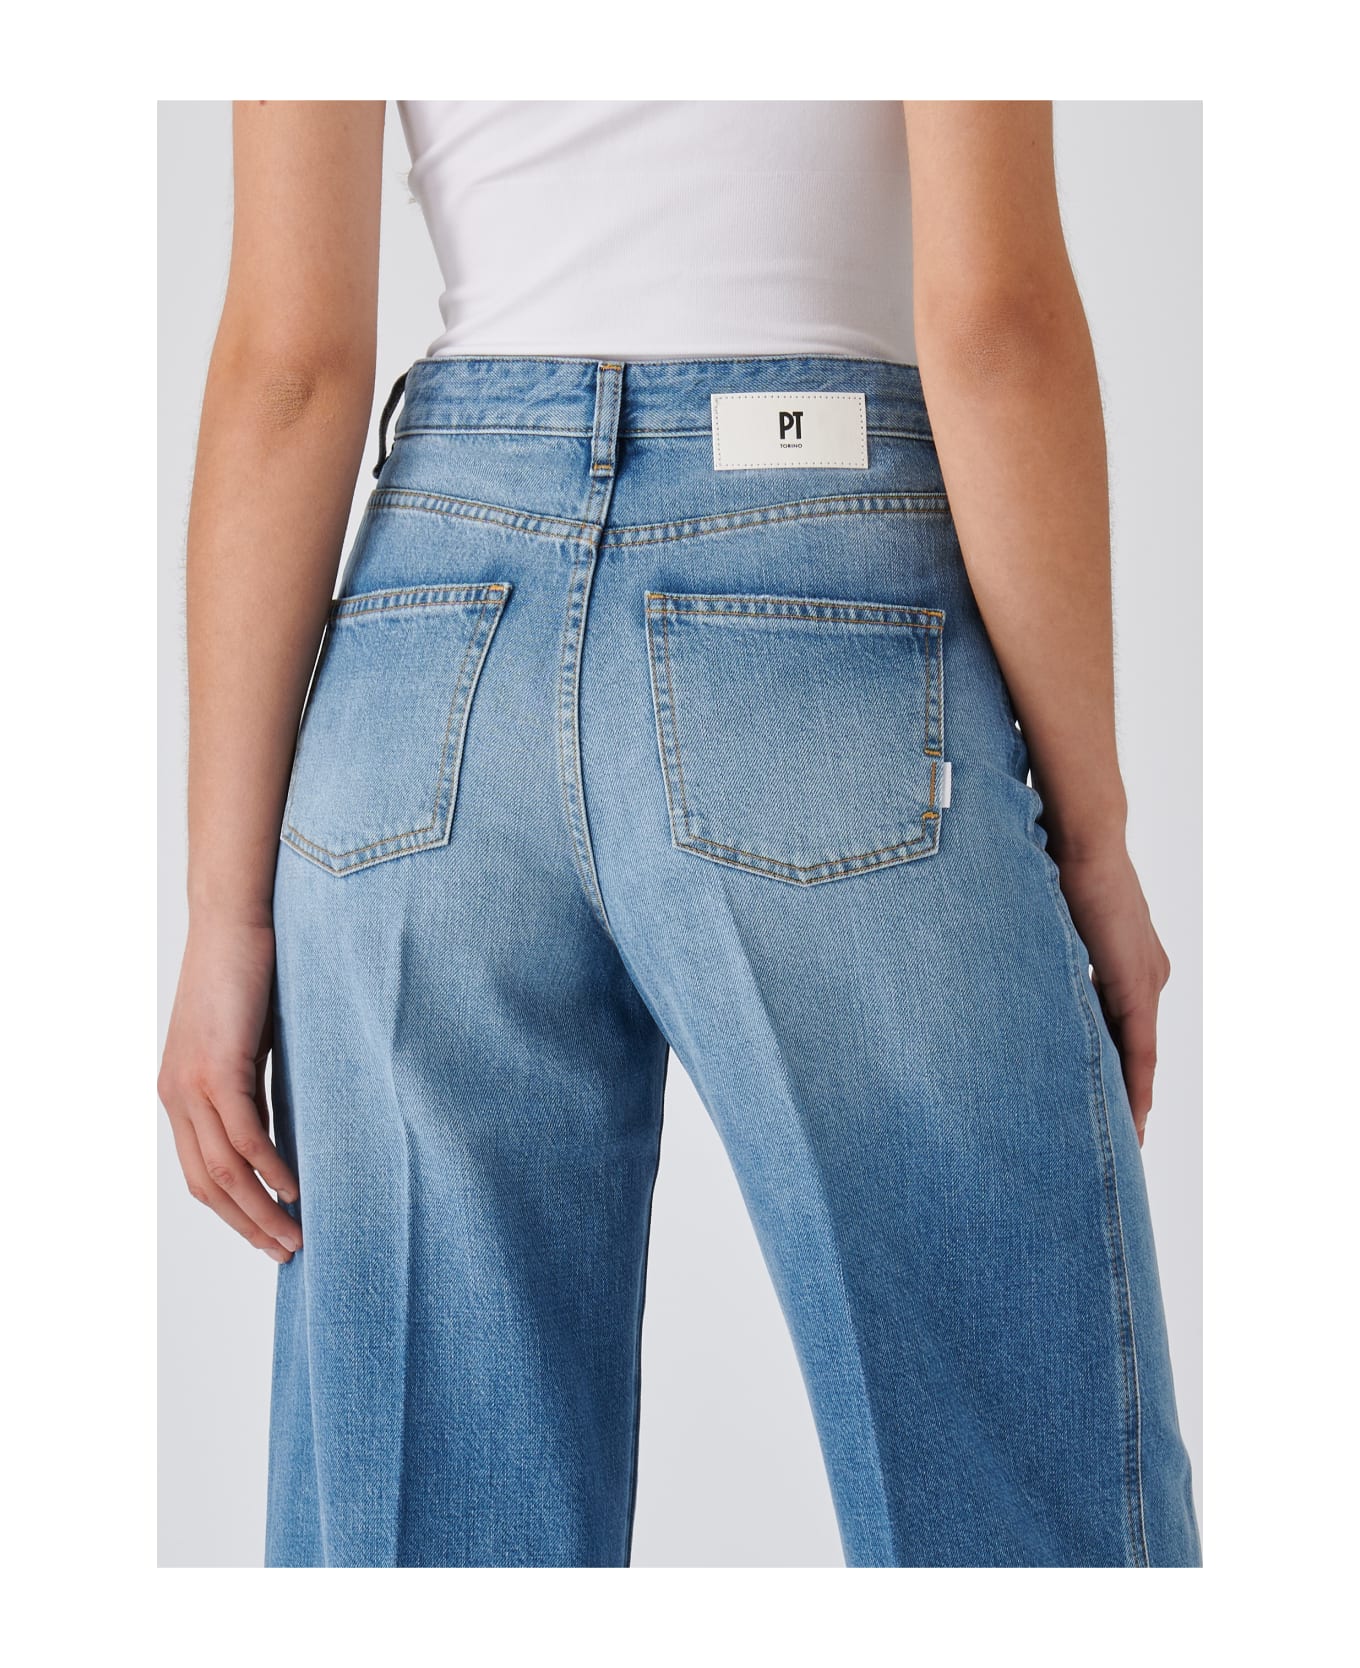 PT Torino Cotton Jeans - DENIM CHIARO